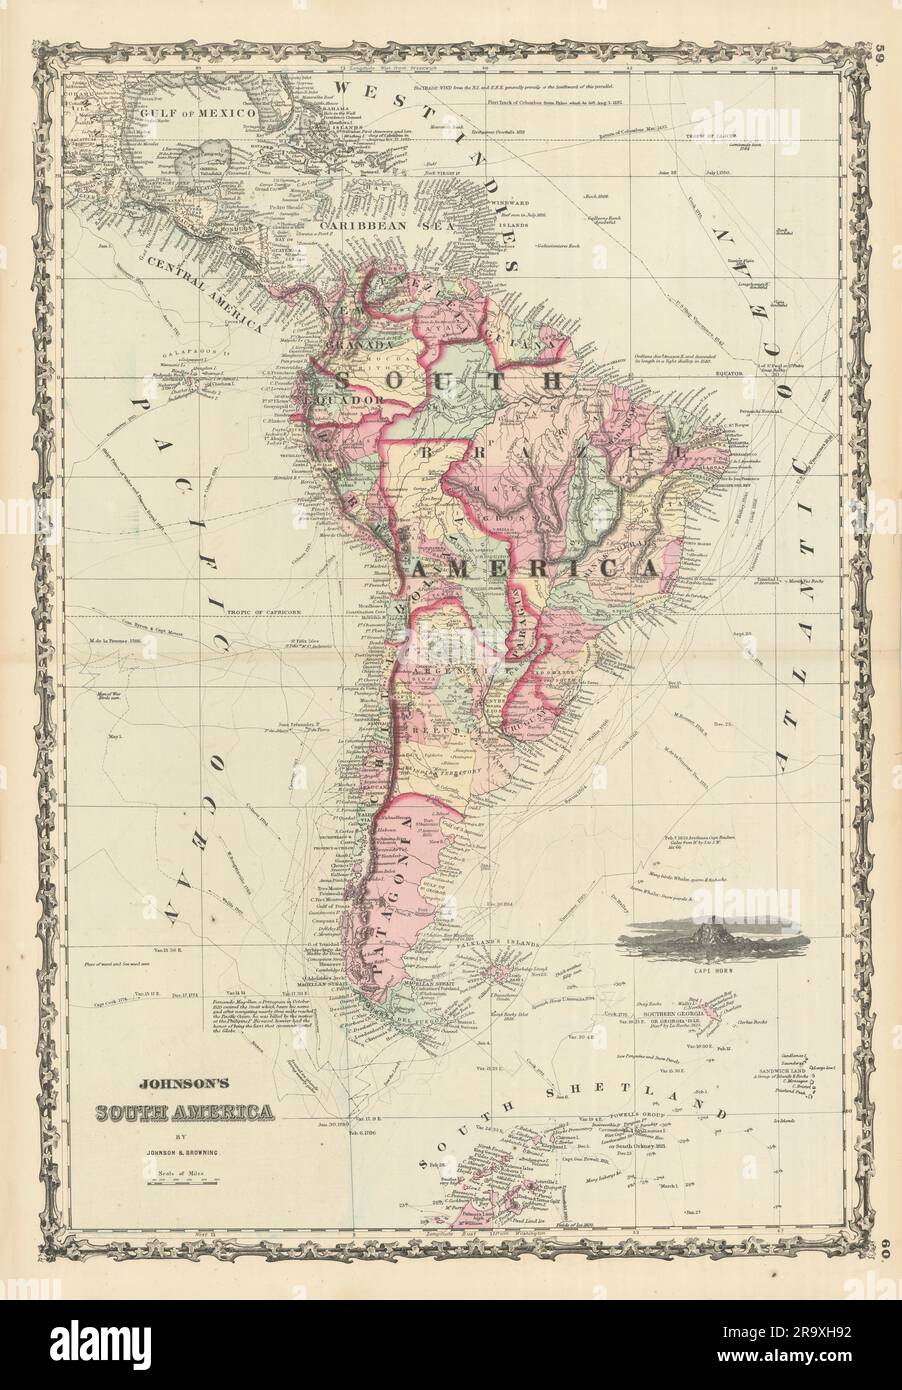 Johnson ist Südamerika. Bolivien mit Littoral. Navigatorrouten 1861 Karte Stockfoto